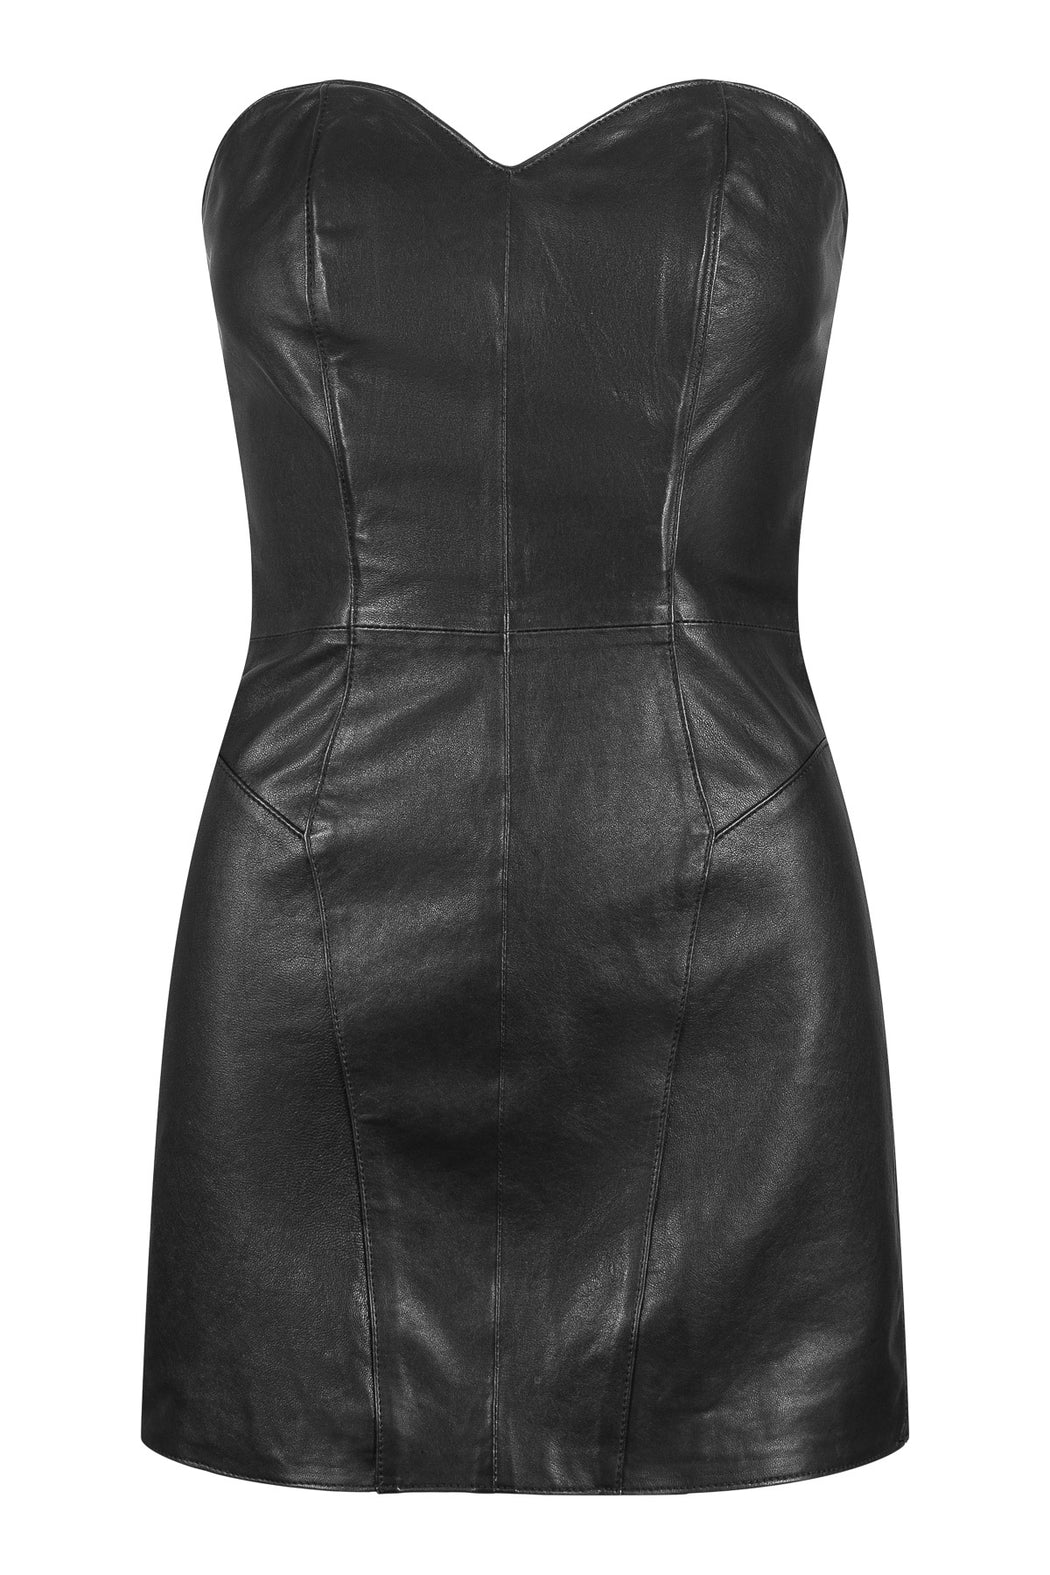 Envelope1976 Beverly dress - Leather Dress Black